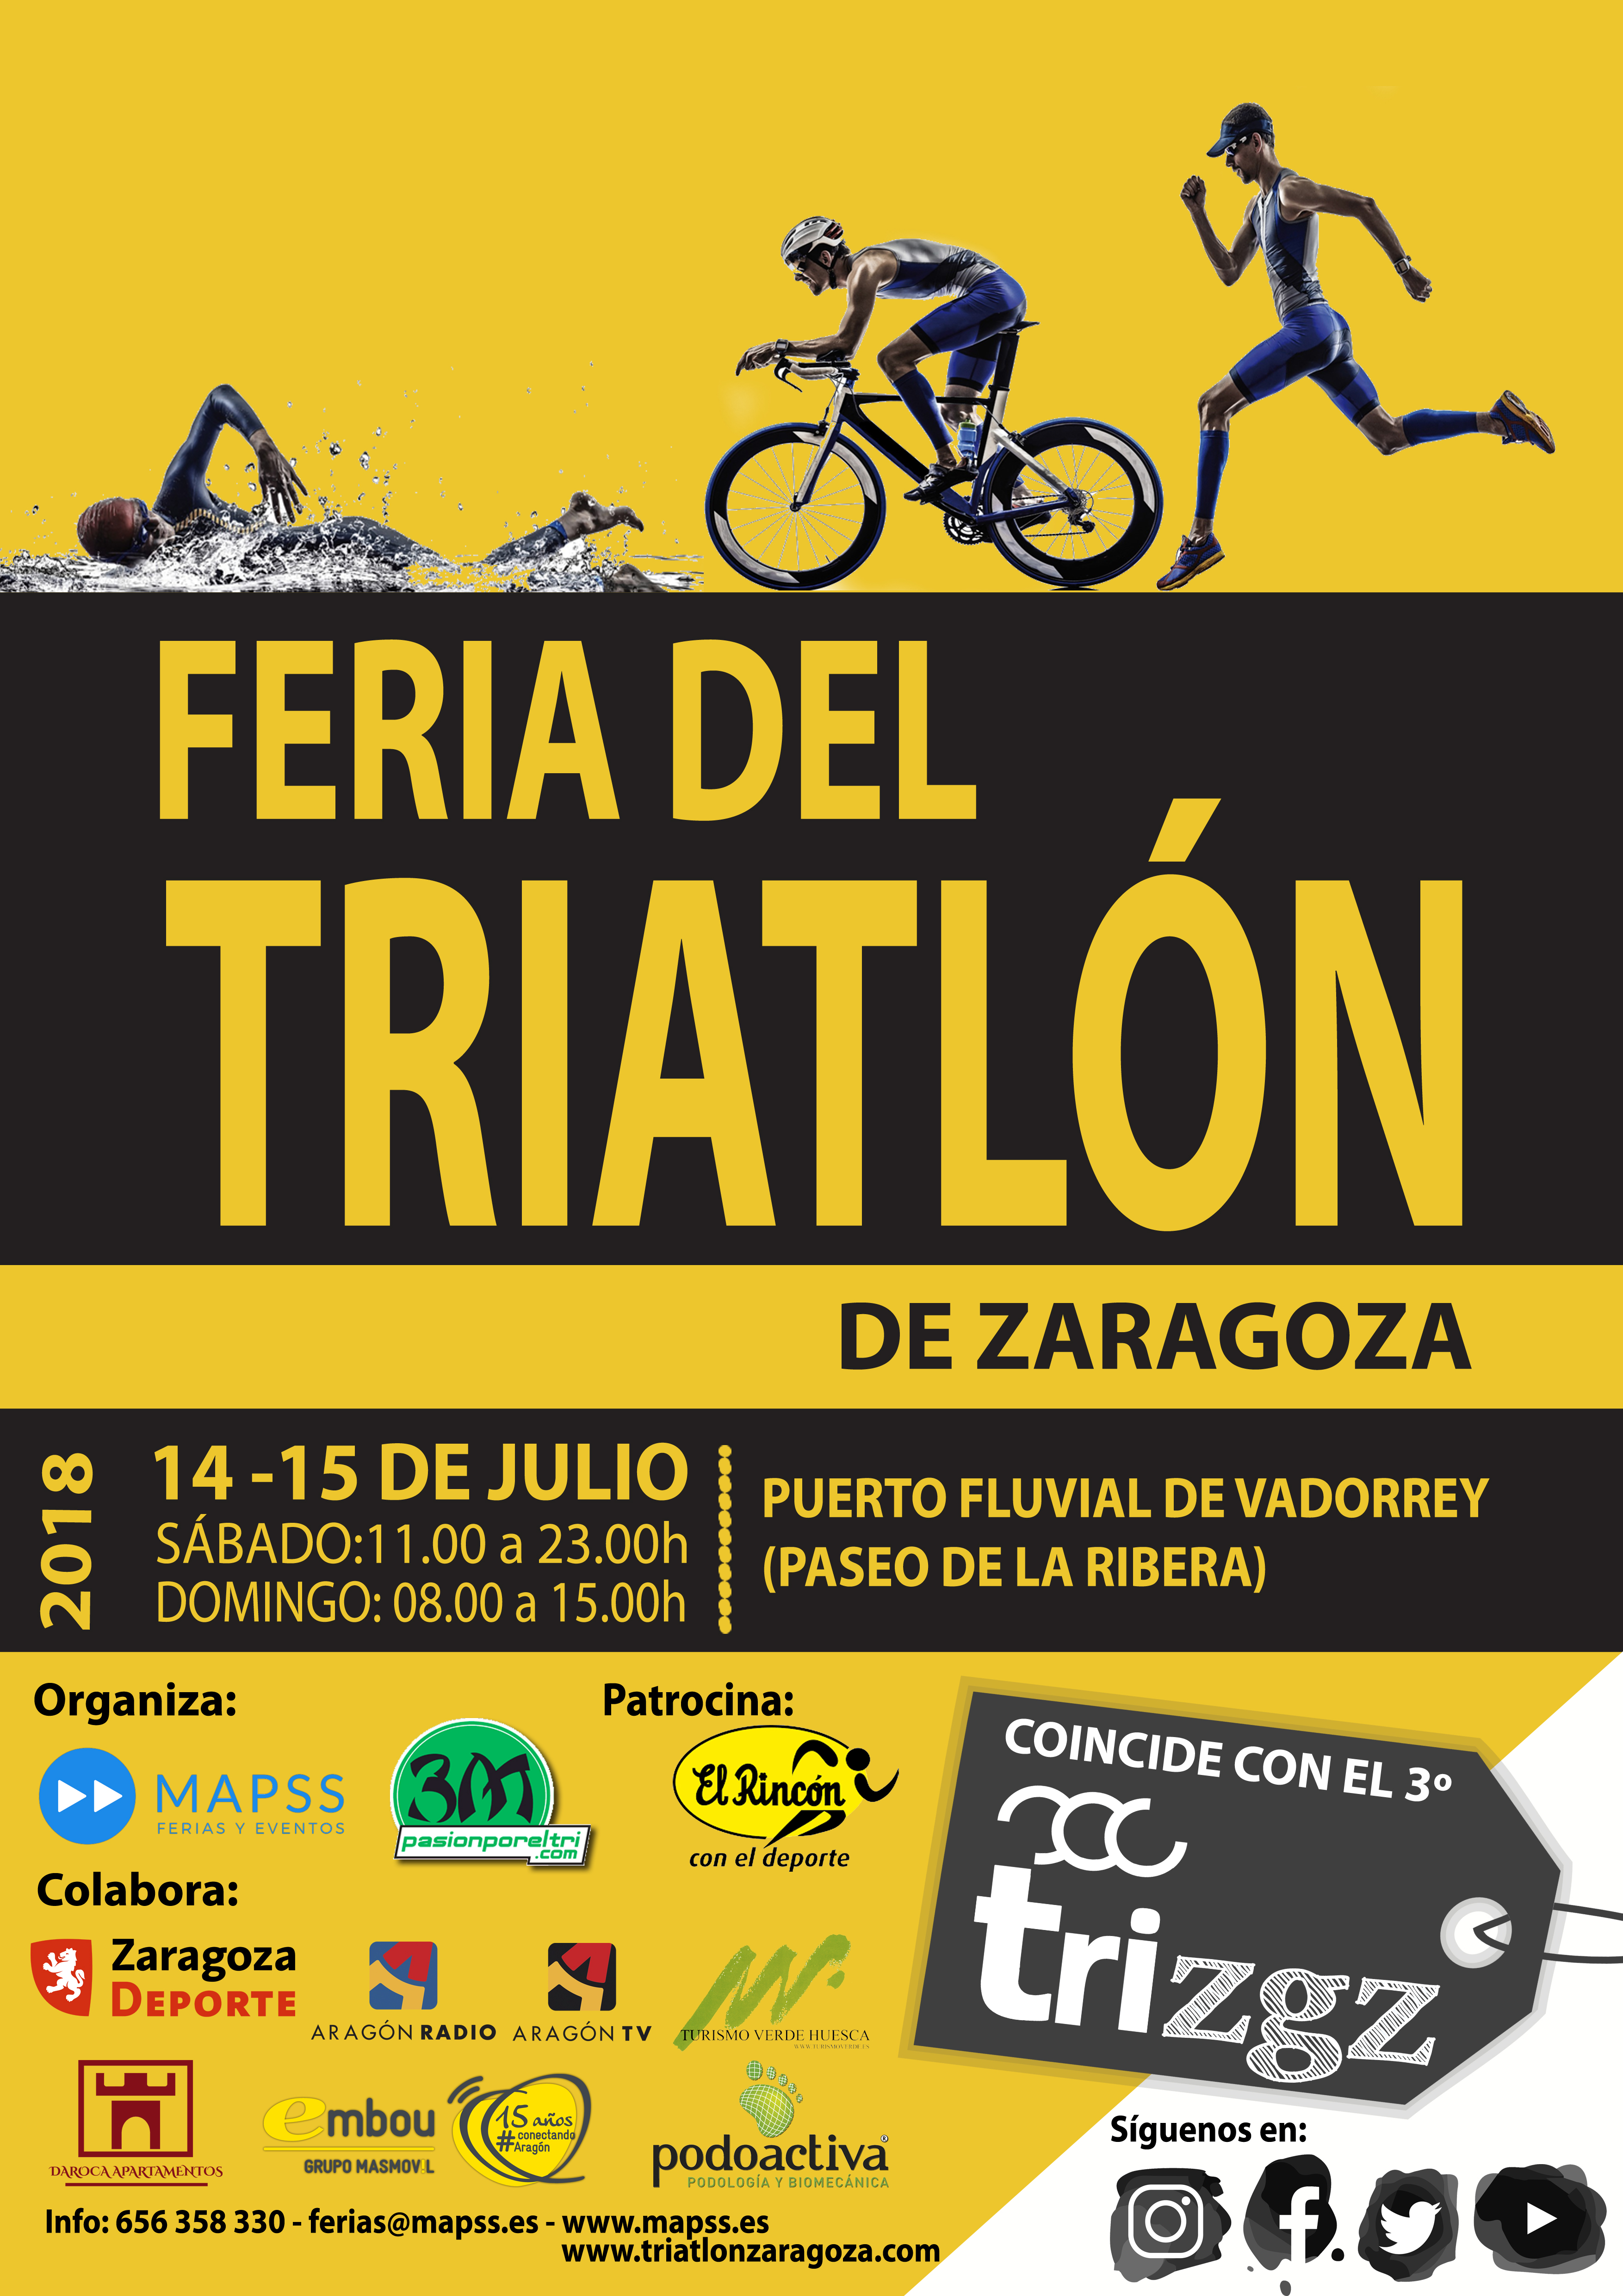 Feria del Triatlón de Zaragoza